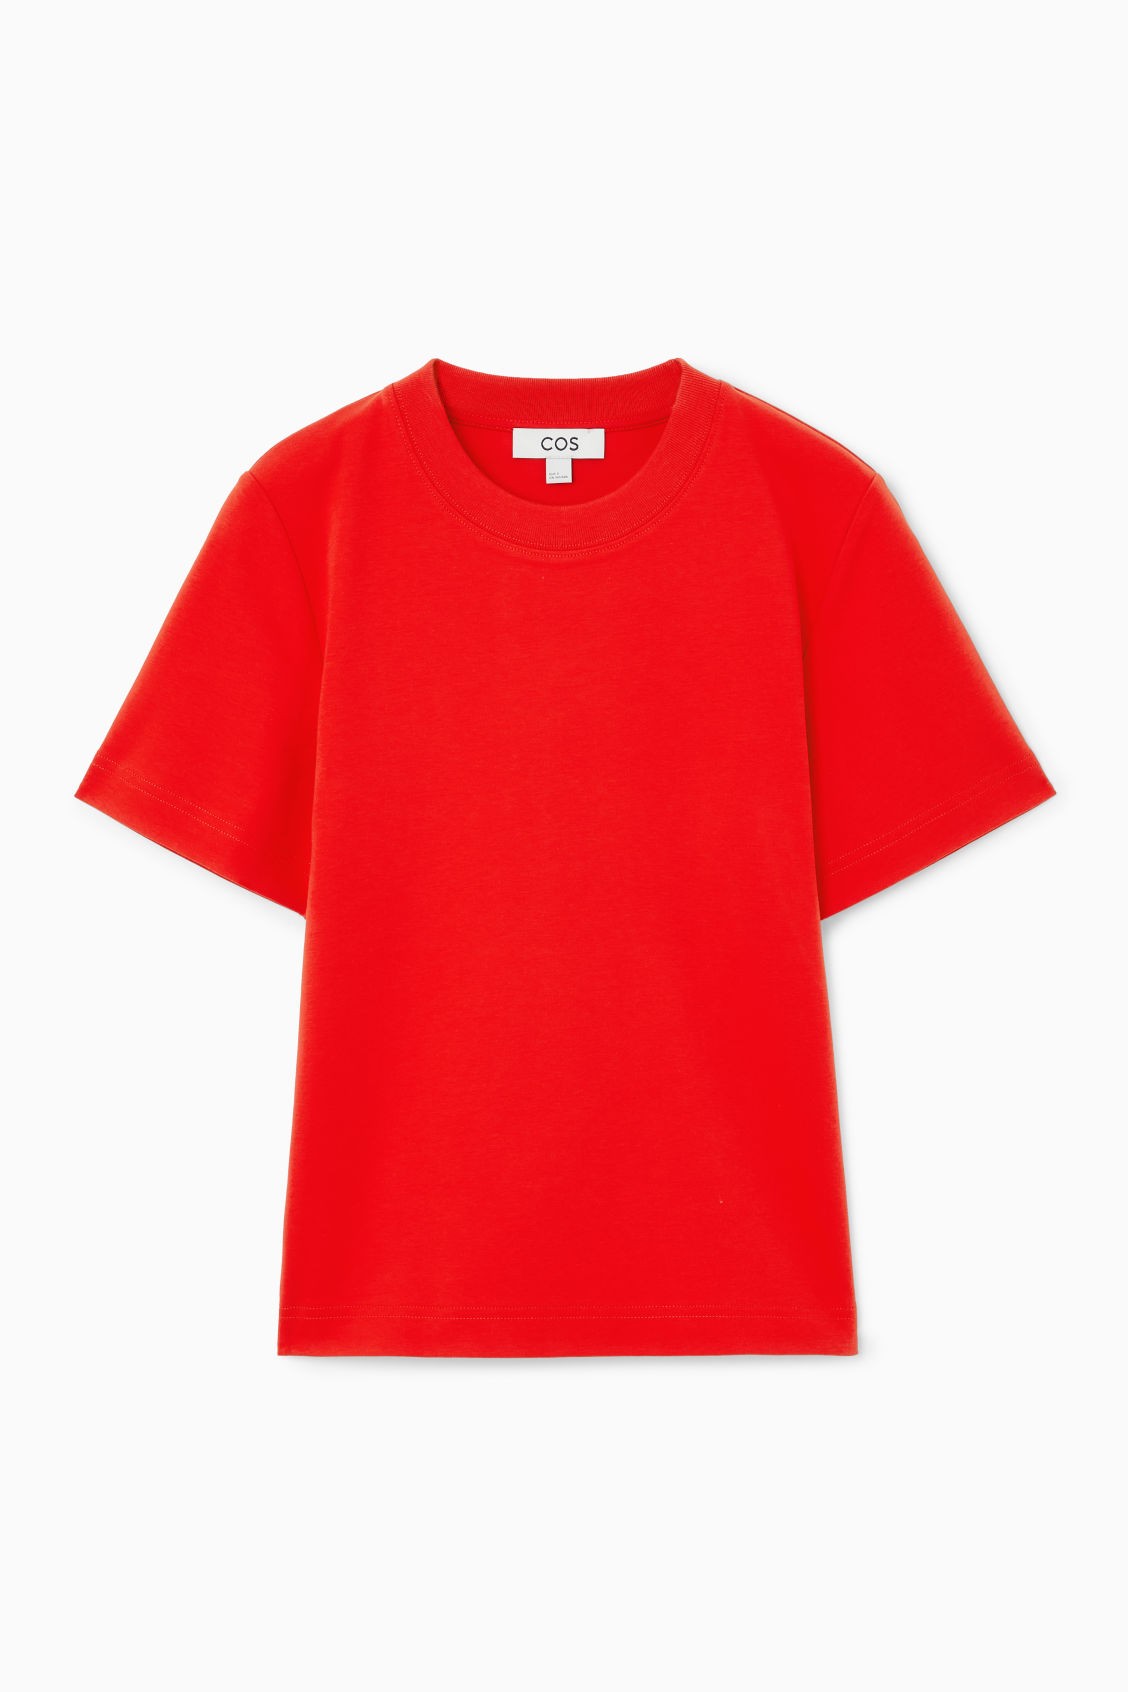 COS Yazlık %100 Pamuk Tshirt - Kırmızı